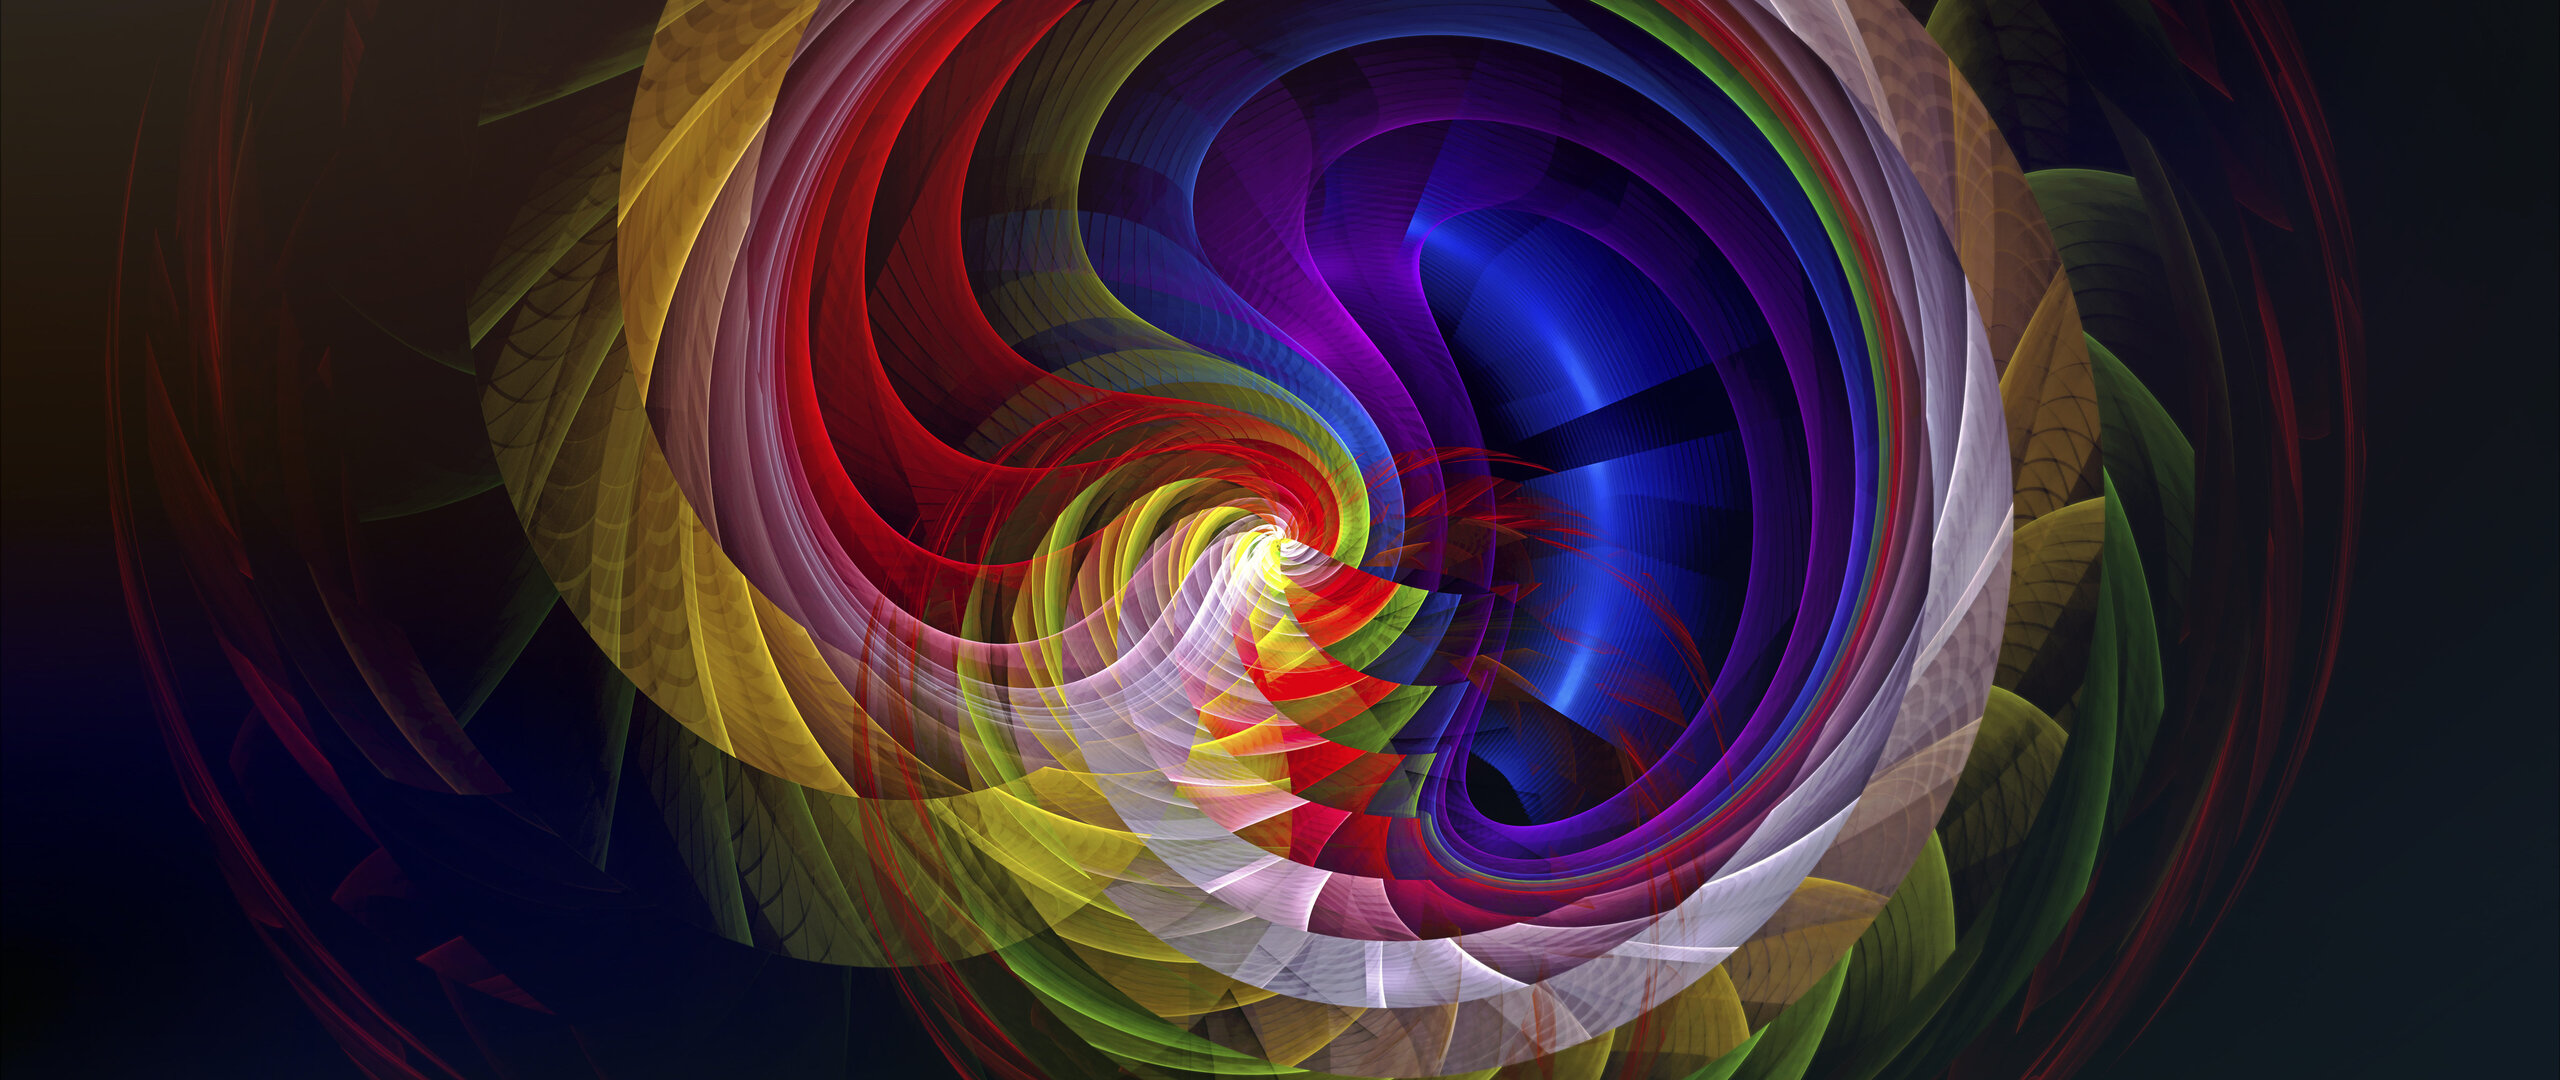 fractal-apopysis-swirl-digital-art-8k-vw-2560x1080.jpg